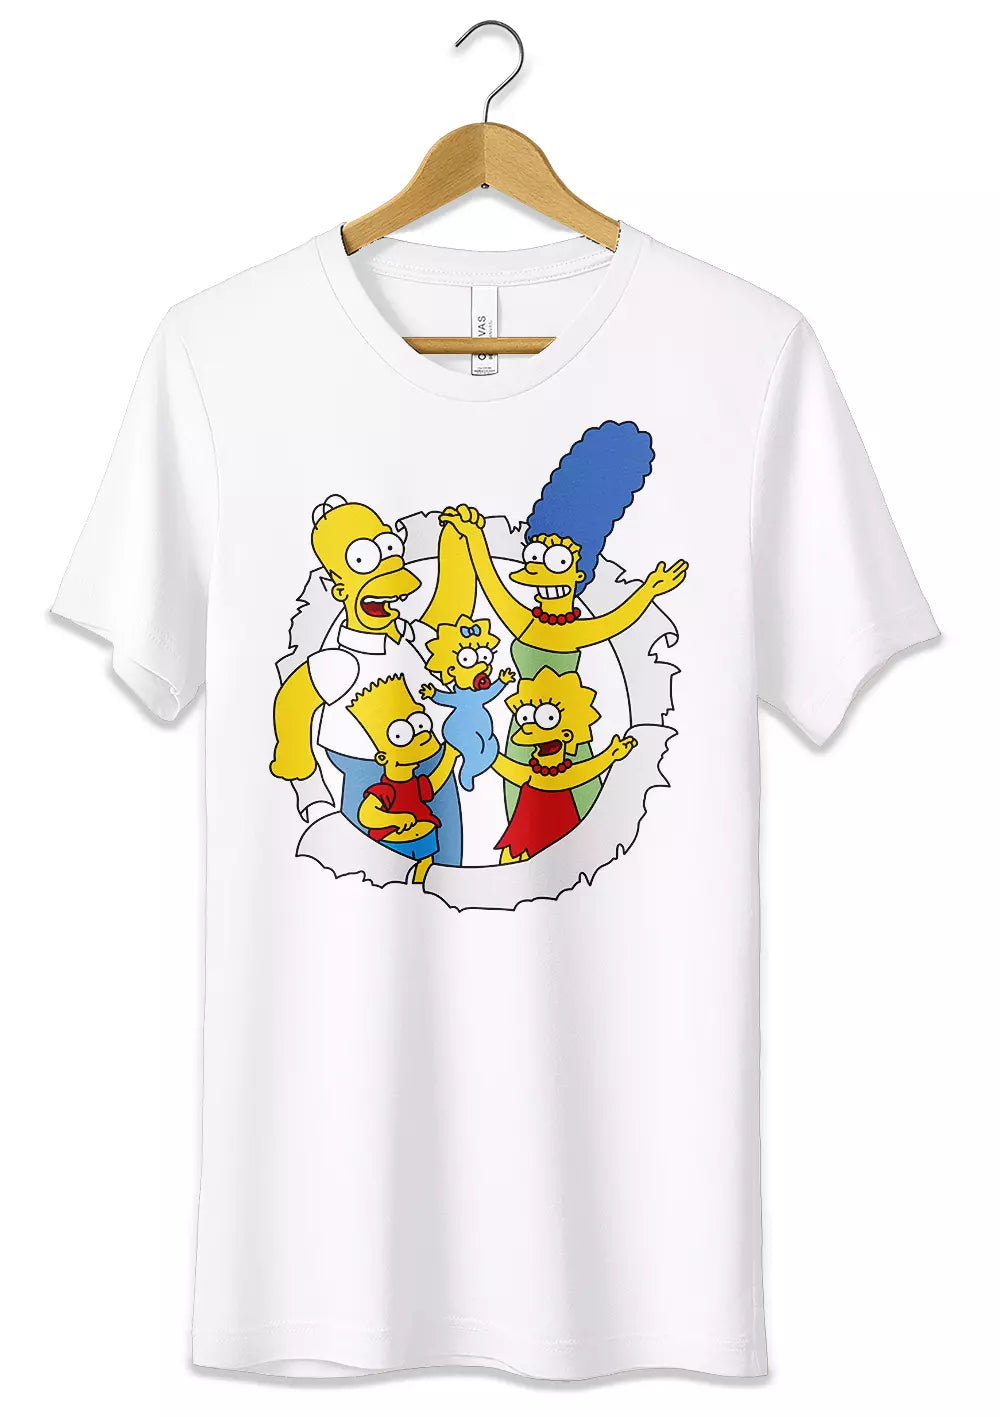 T-Shirt Maglietta The Simpson, CmrDesignStore, T-Shirt, t-shirt-maglietta-the-simpson, CmrDesignStore